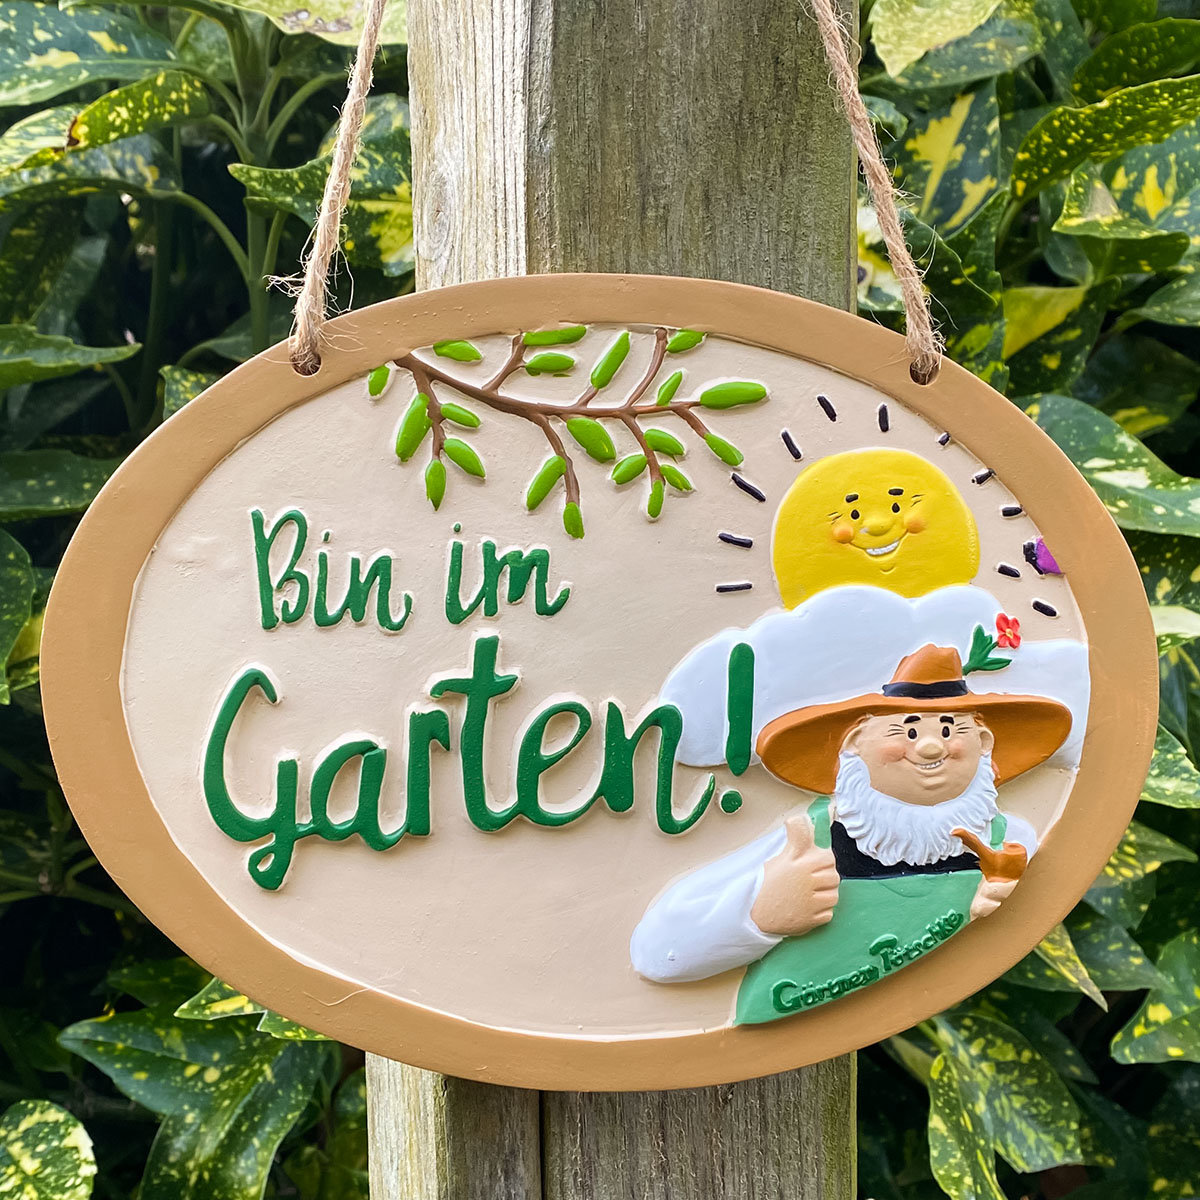 Gartenschild "Bin im Garten"
| #3